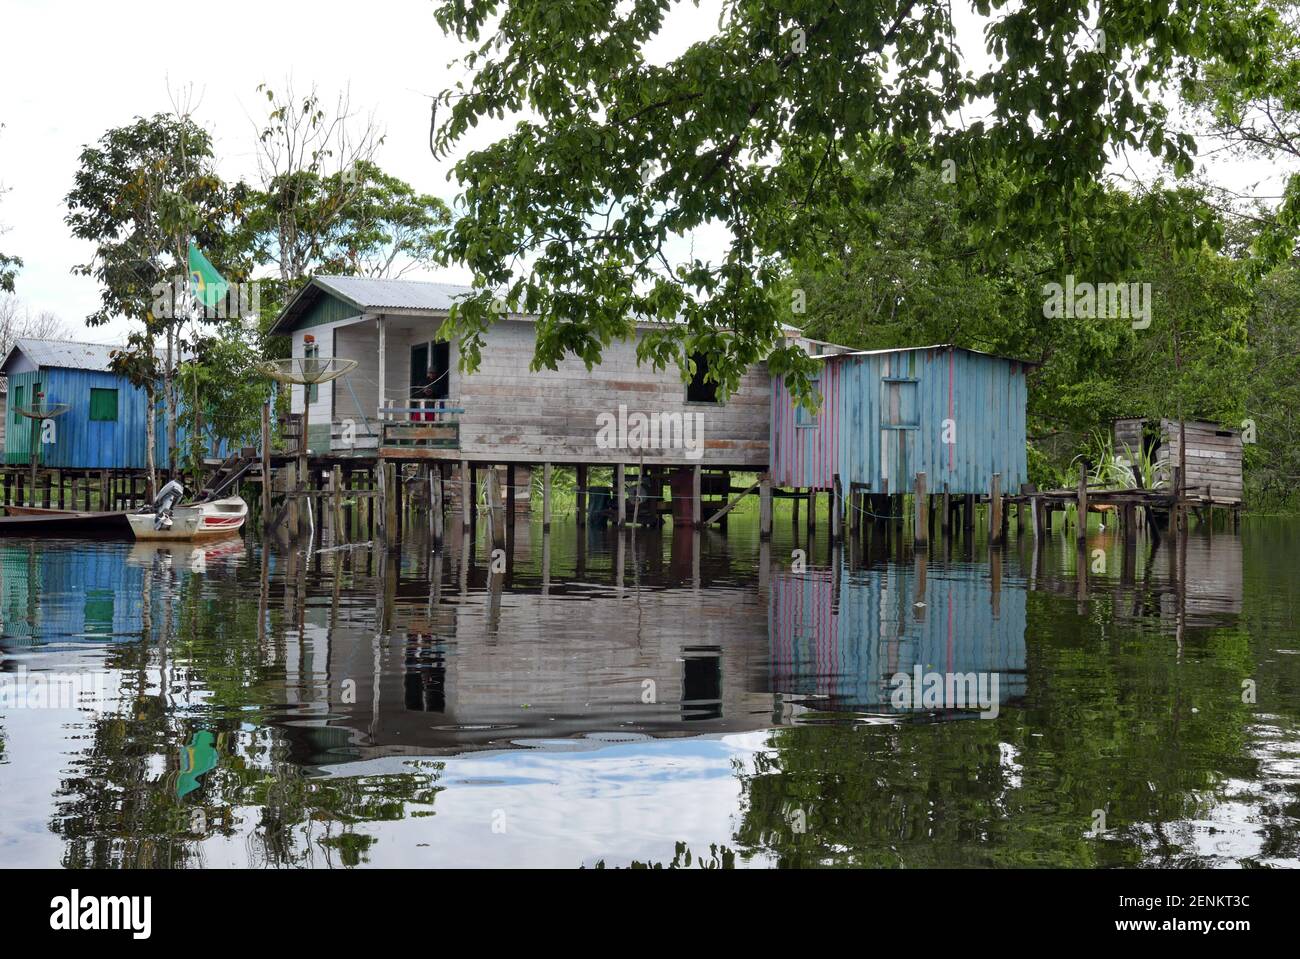 The flooded village of Boca de Mamirauá in the Mamirauá Sustainable Development Reserve Amazonas Brazil Stock Photo